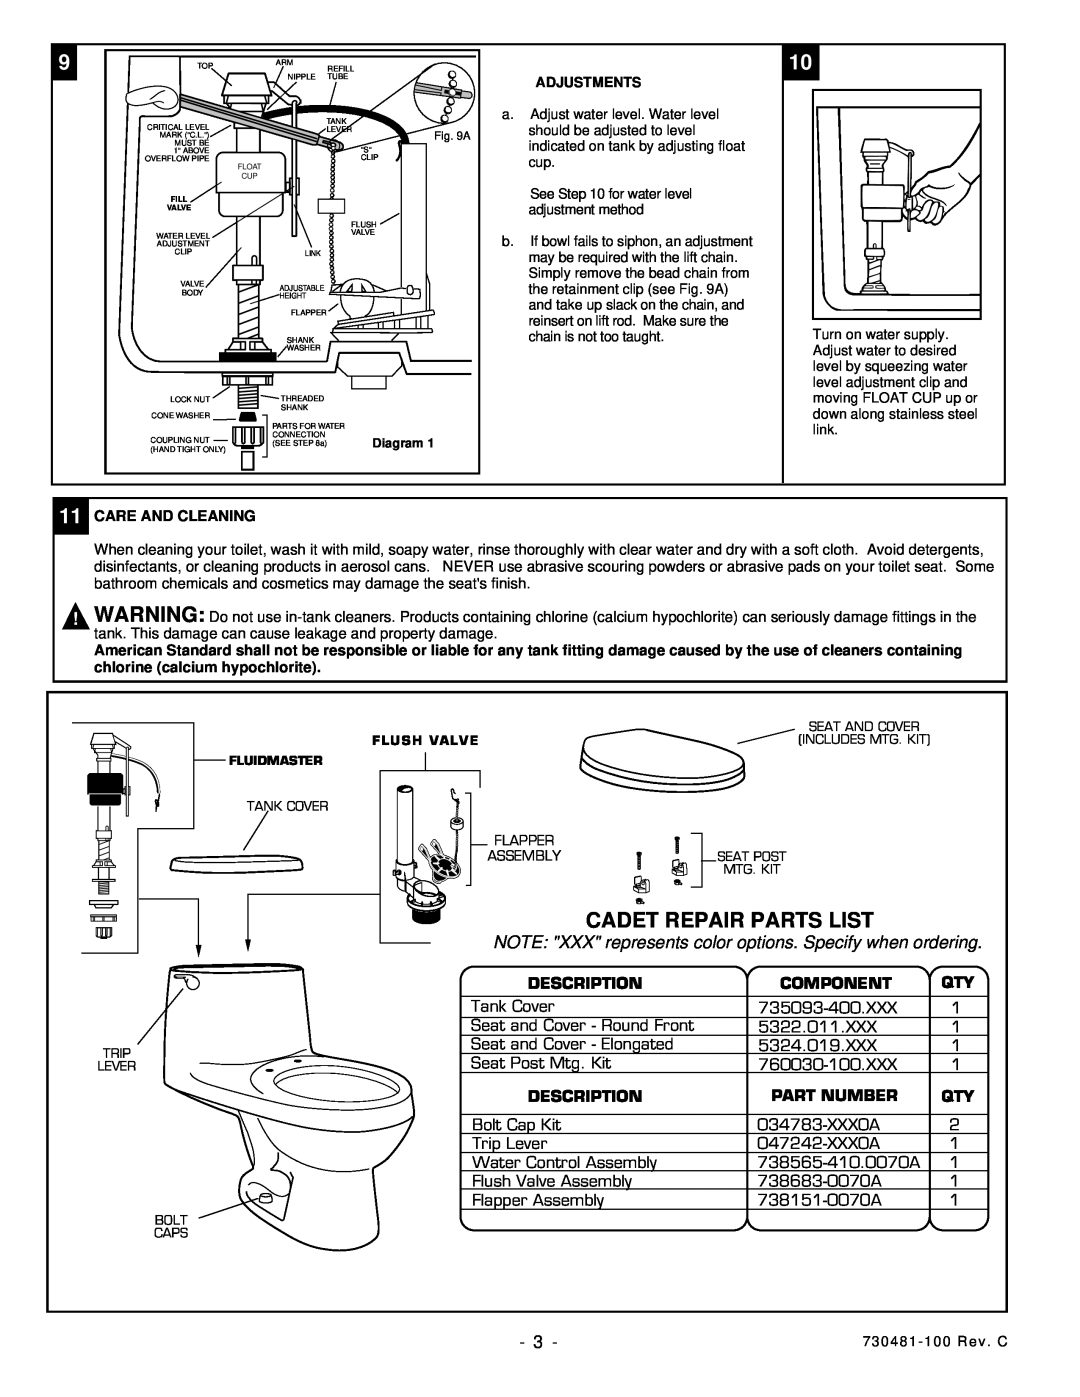 American Standard 2100 installation instructions Cadet Repair Parts List, Description, Component, Part Number 